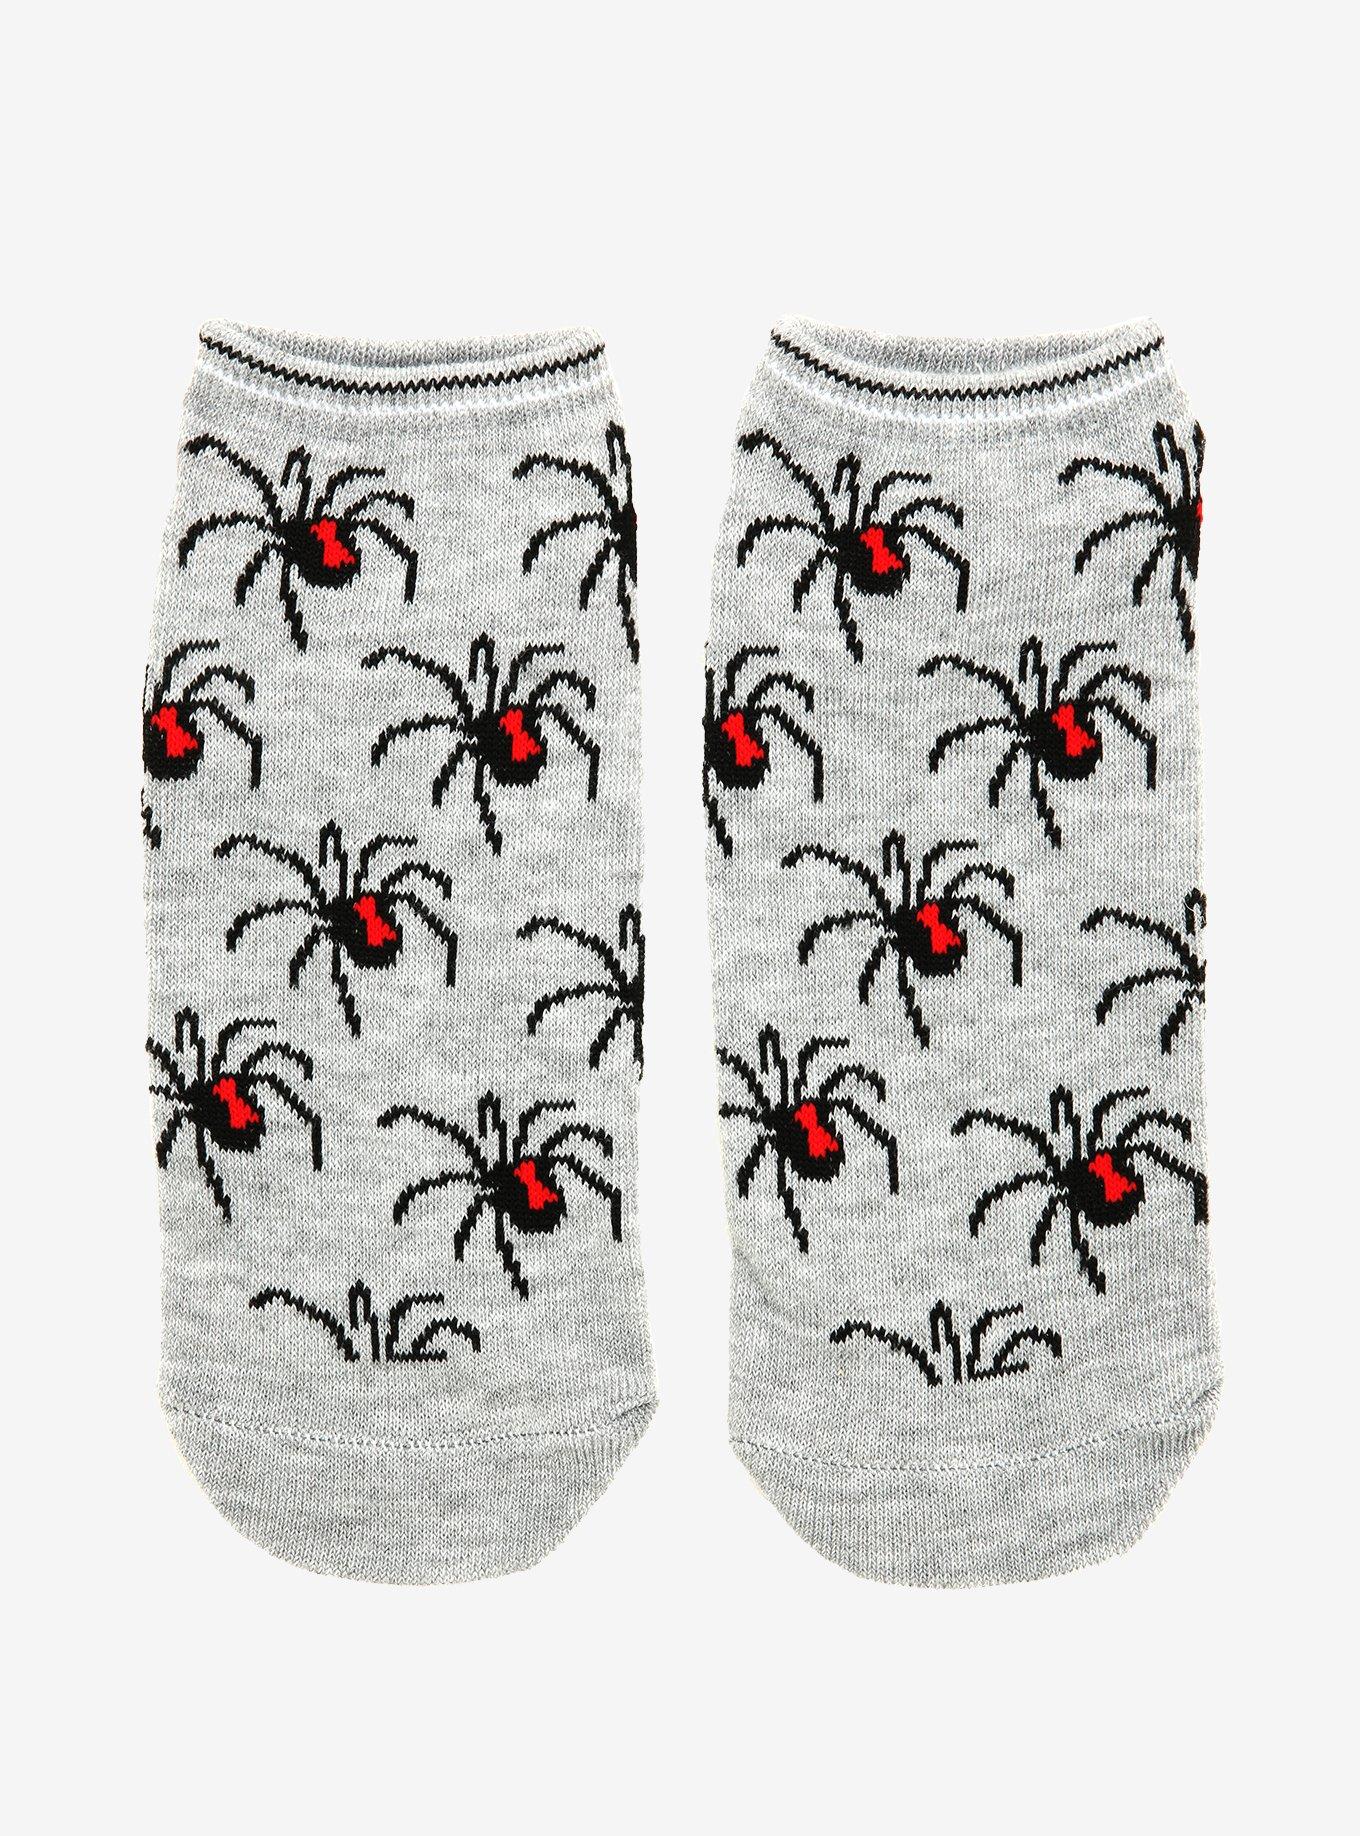 Marvel Black Widow Spider No-Show Socks, , hi-res